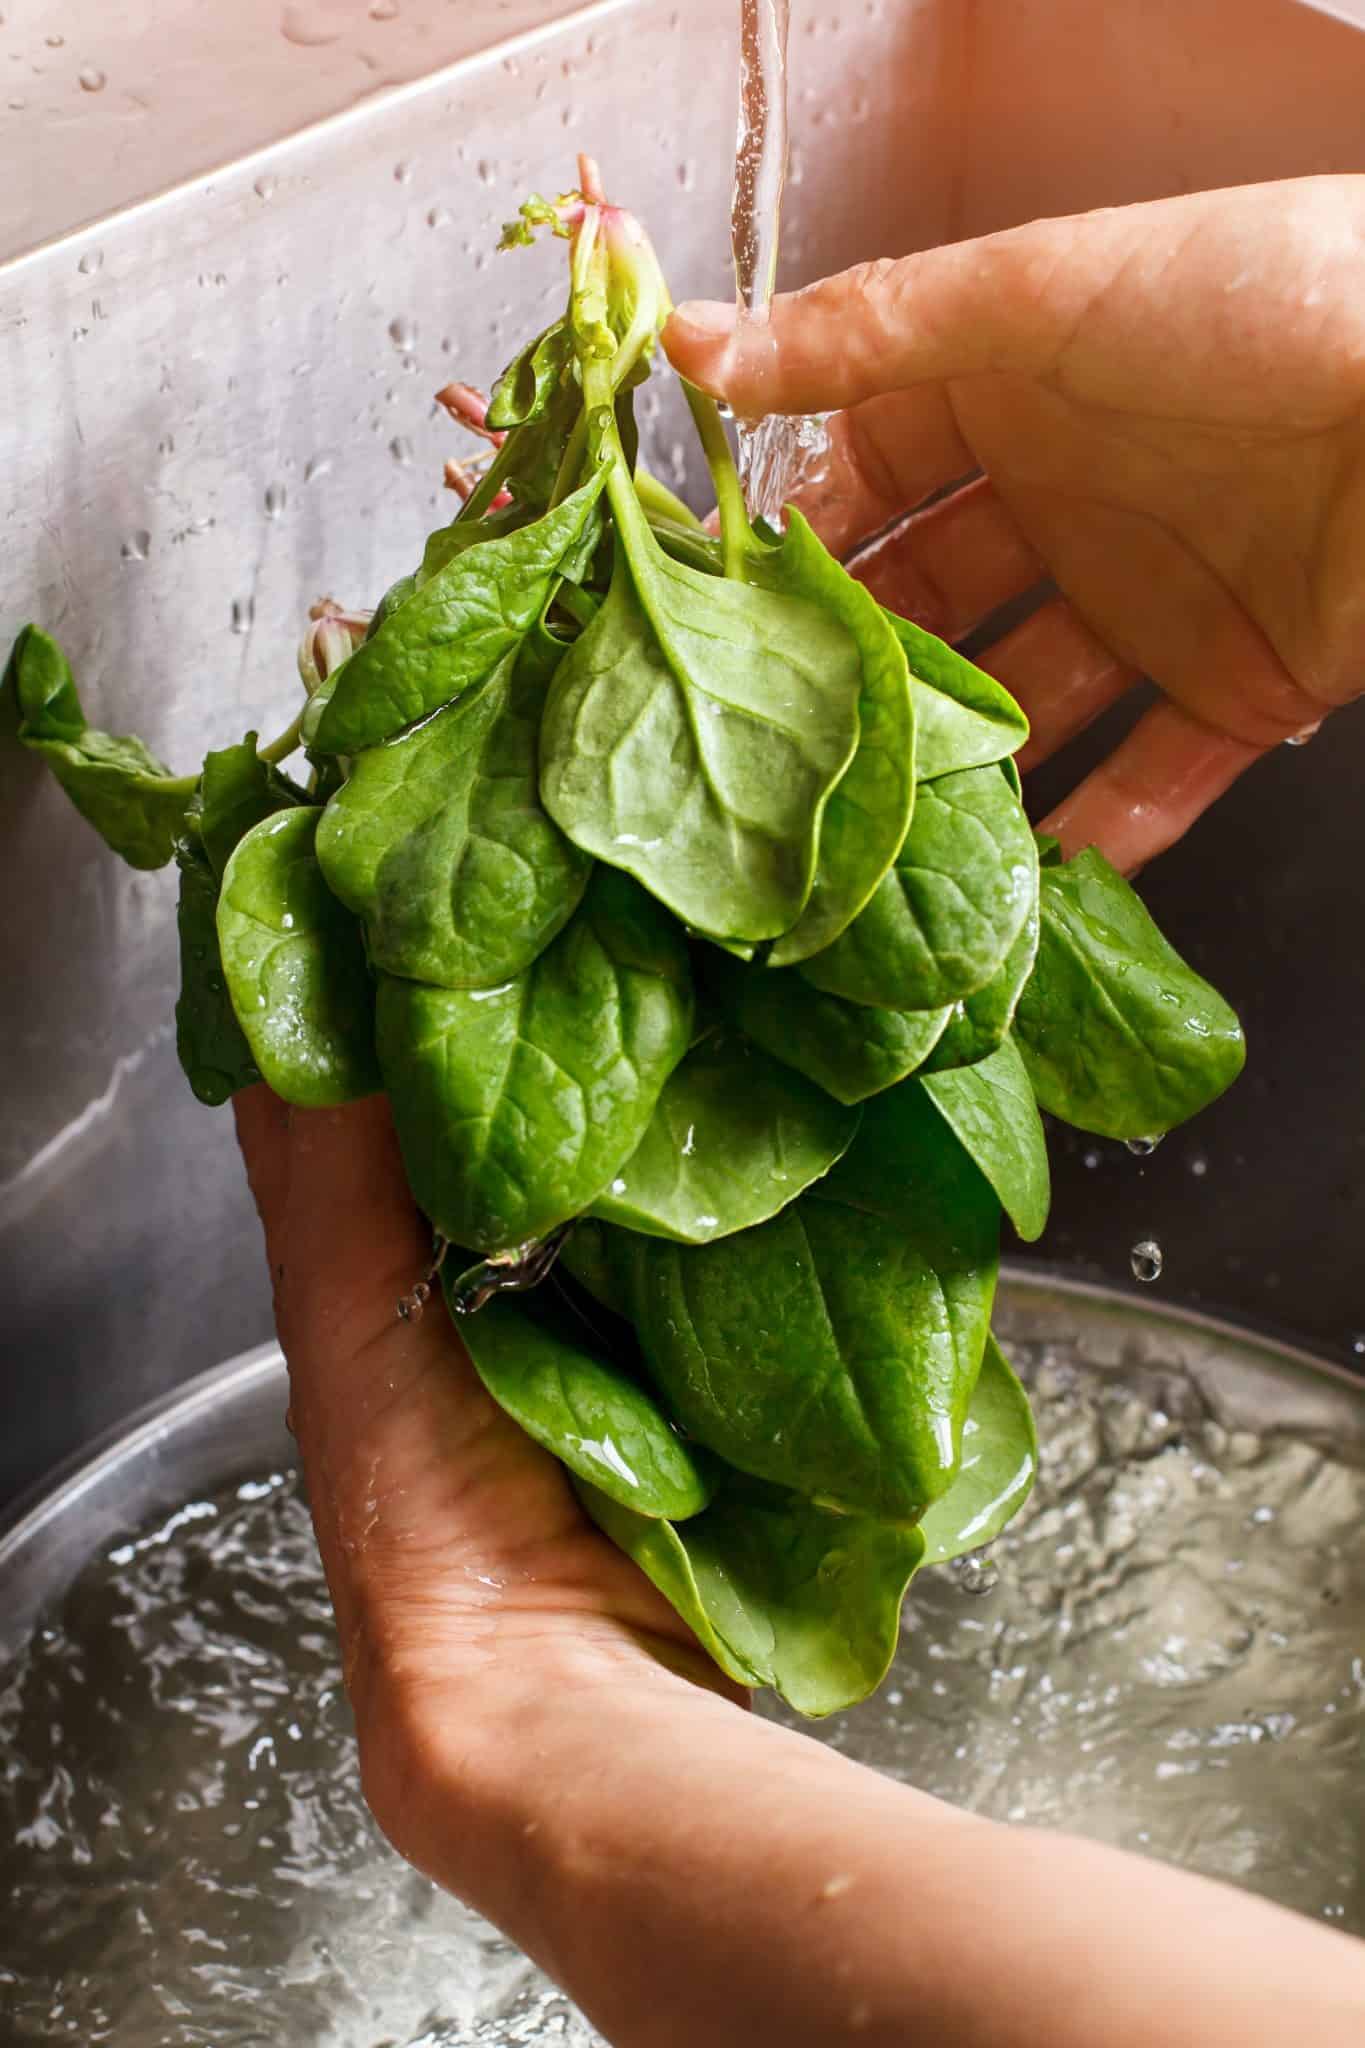 http://sallysorganics.com/wp-content/uploads/2017/04/washing-spinach.jpg